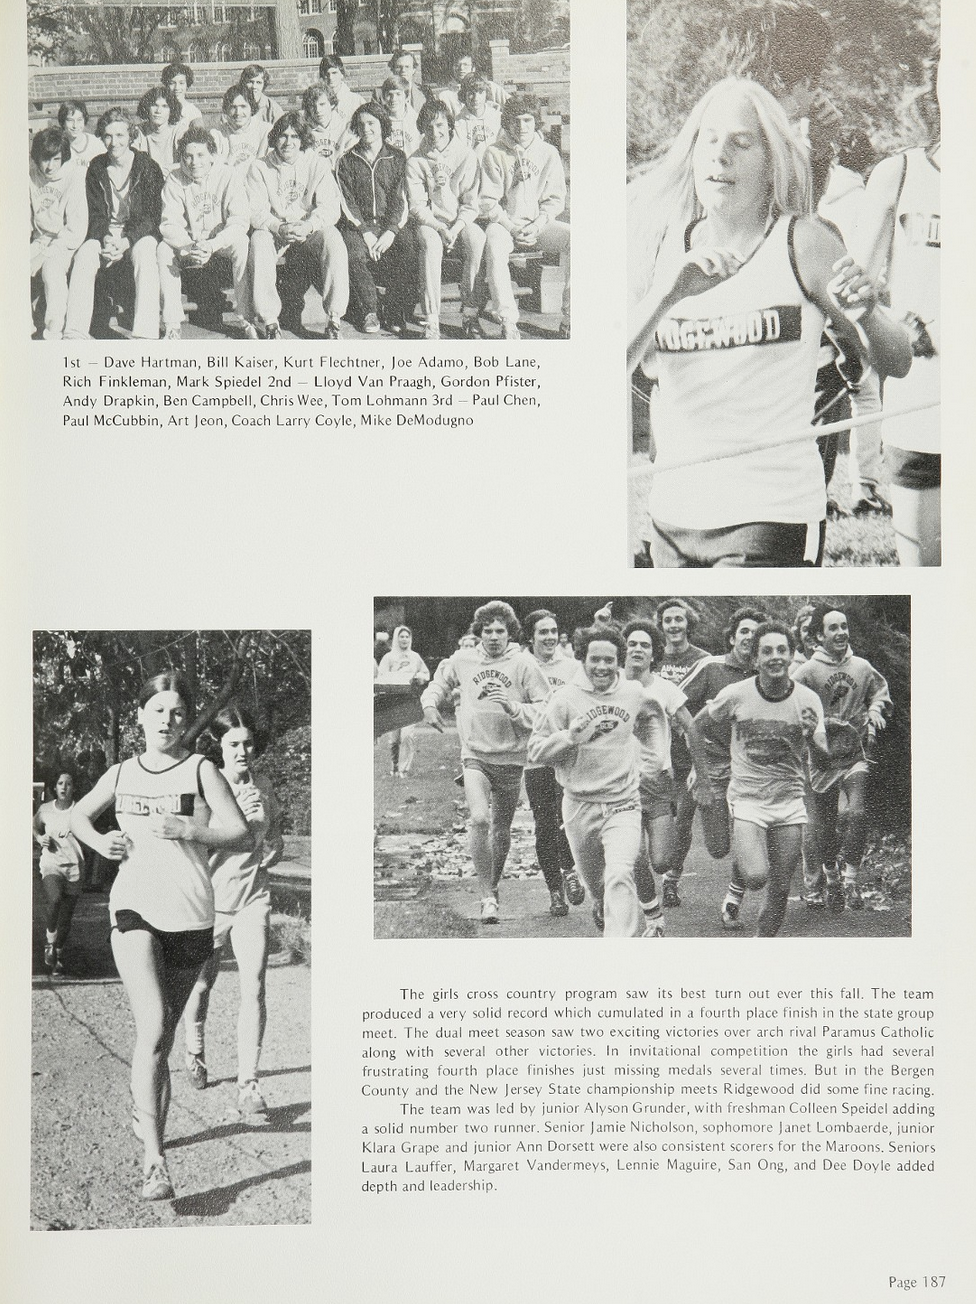 1976 Boys’ Cross Country Team